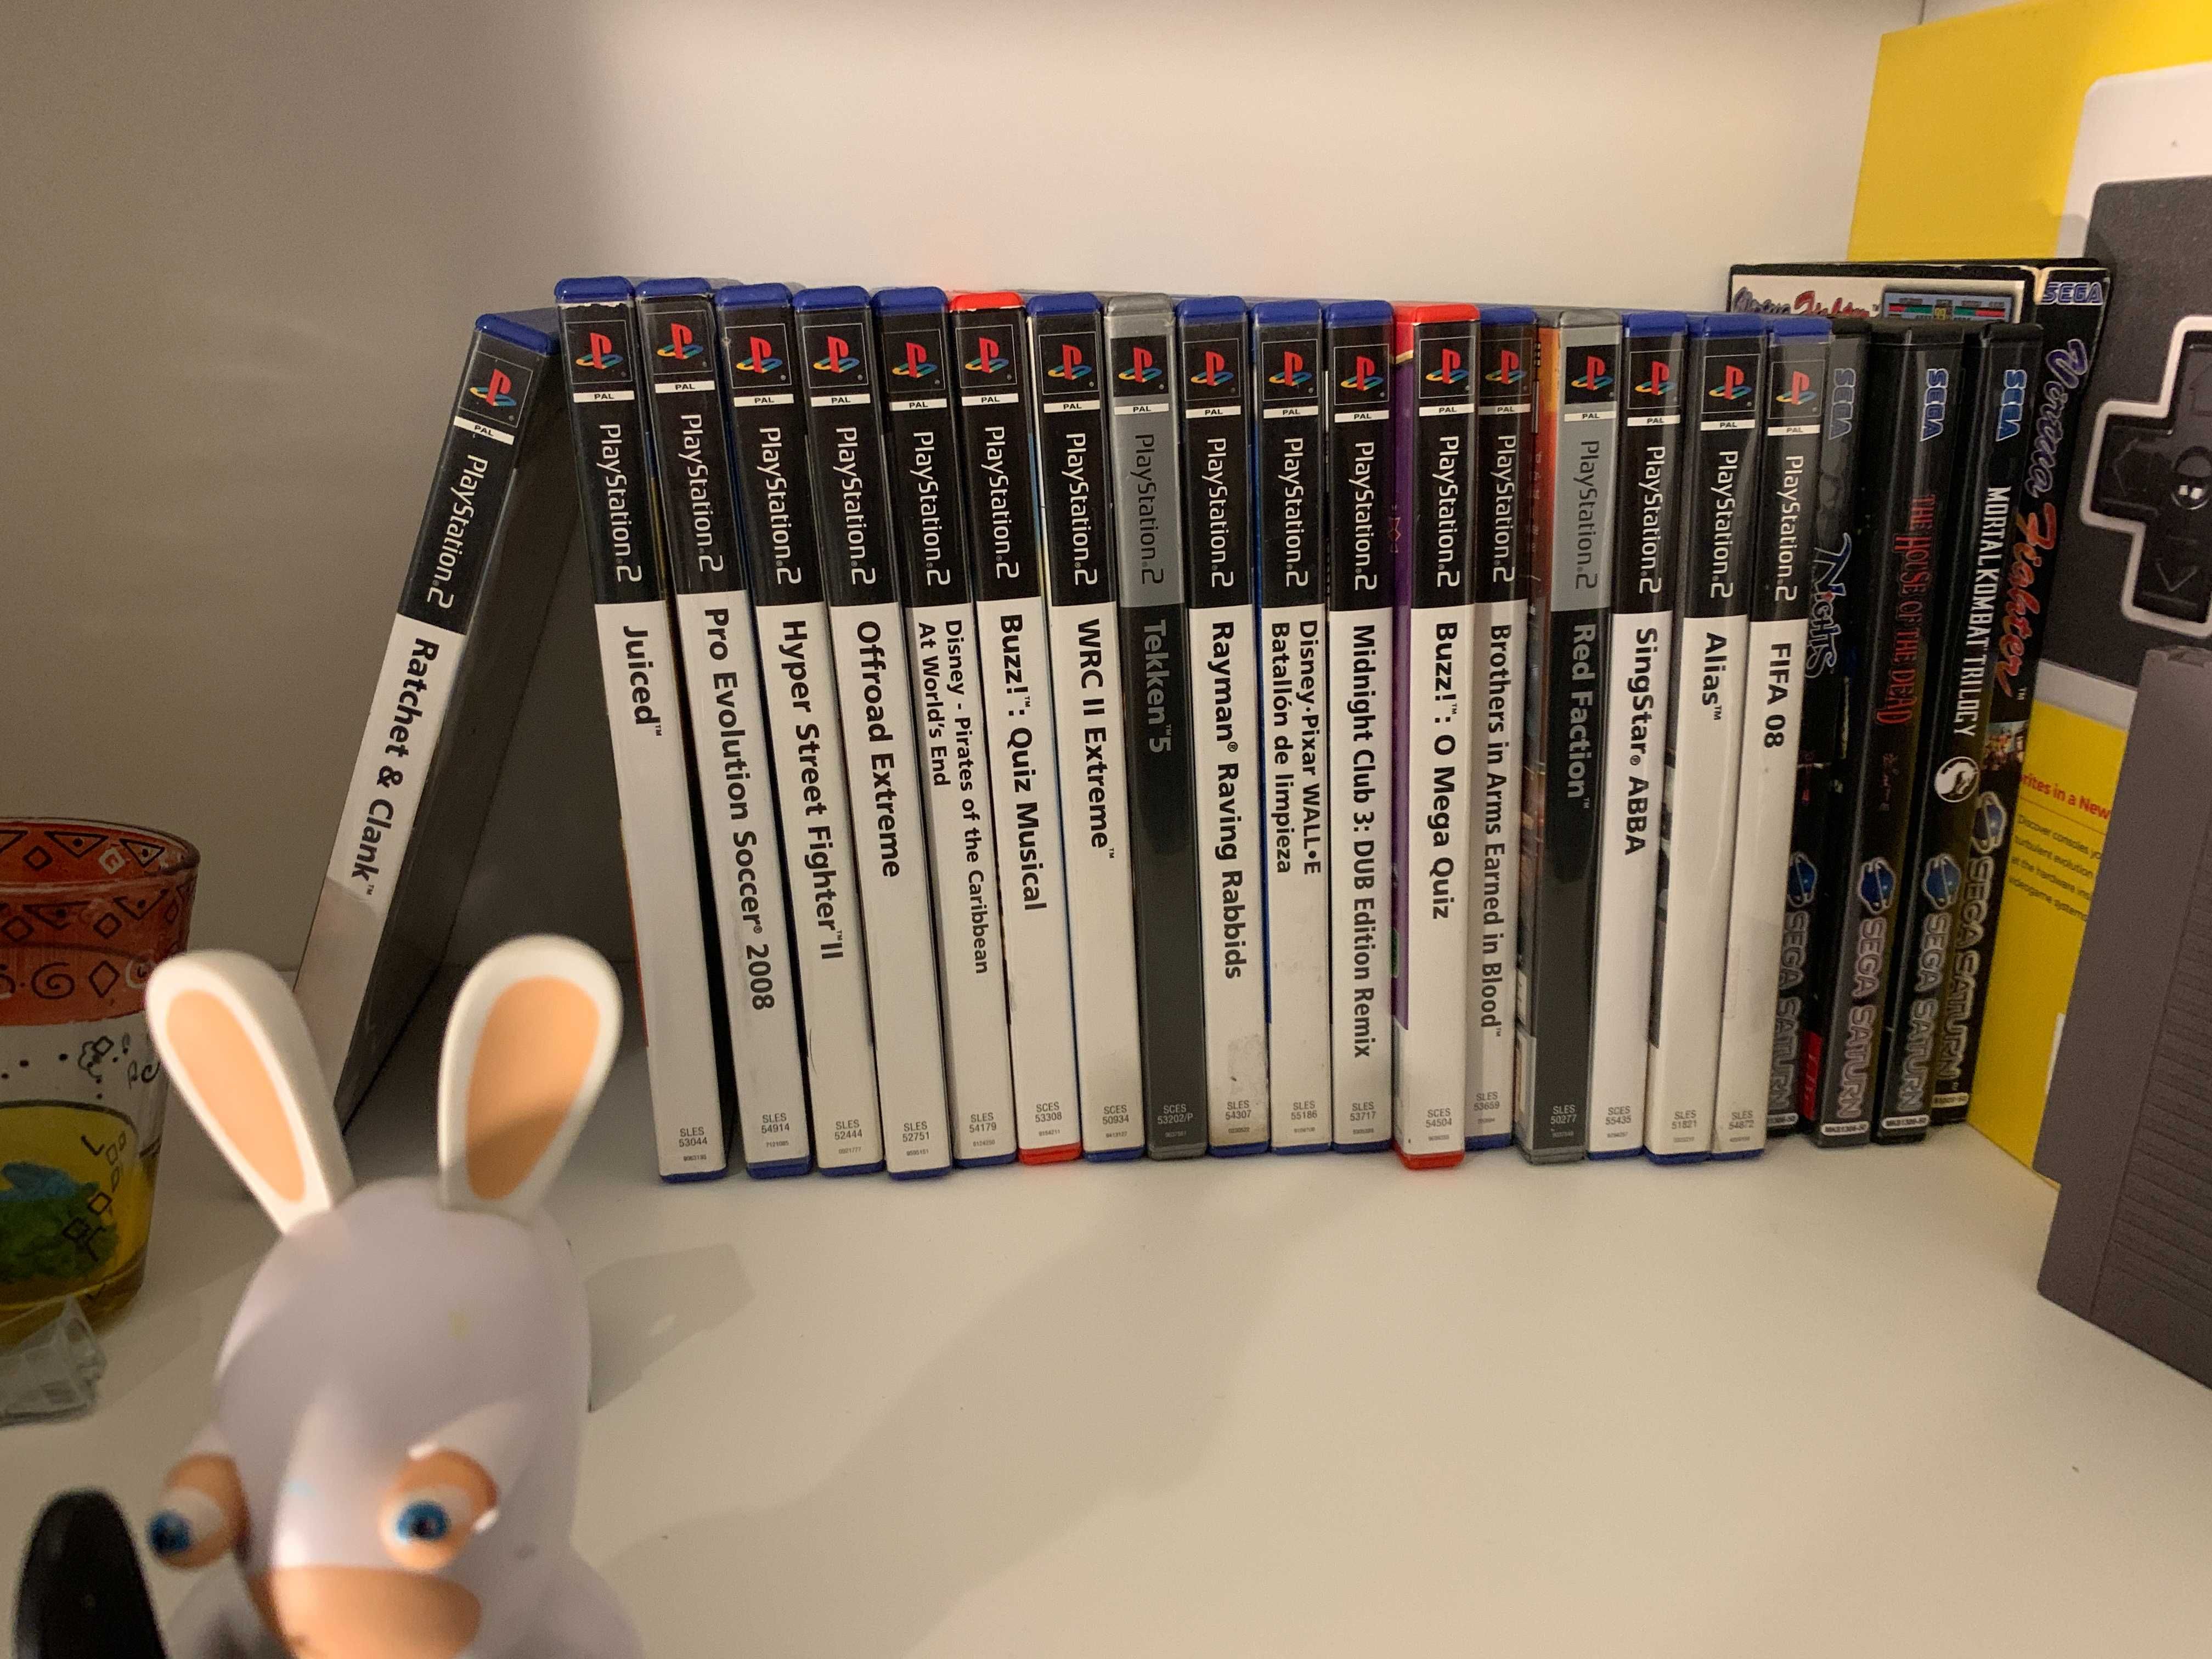 Jogos Mega Drive, Nintendo 64, Playstation 2,  Nintendo DS, etc